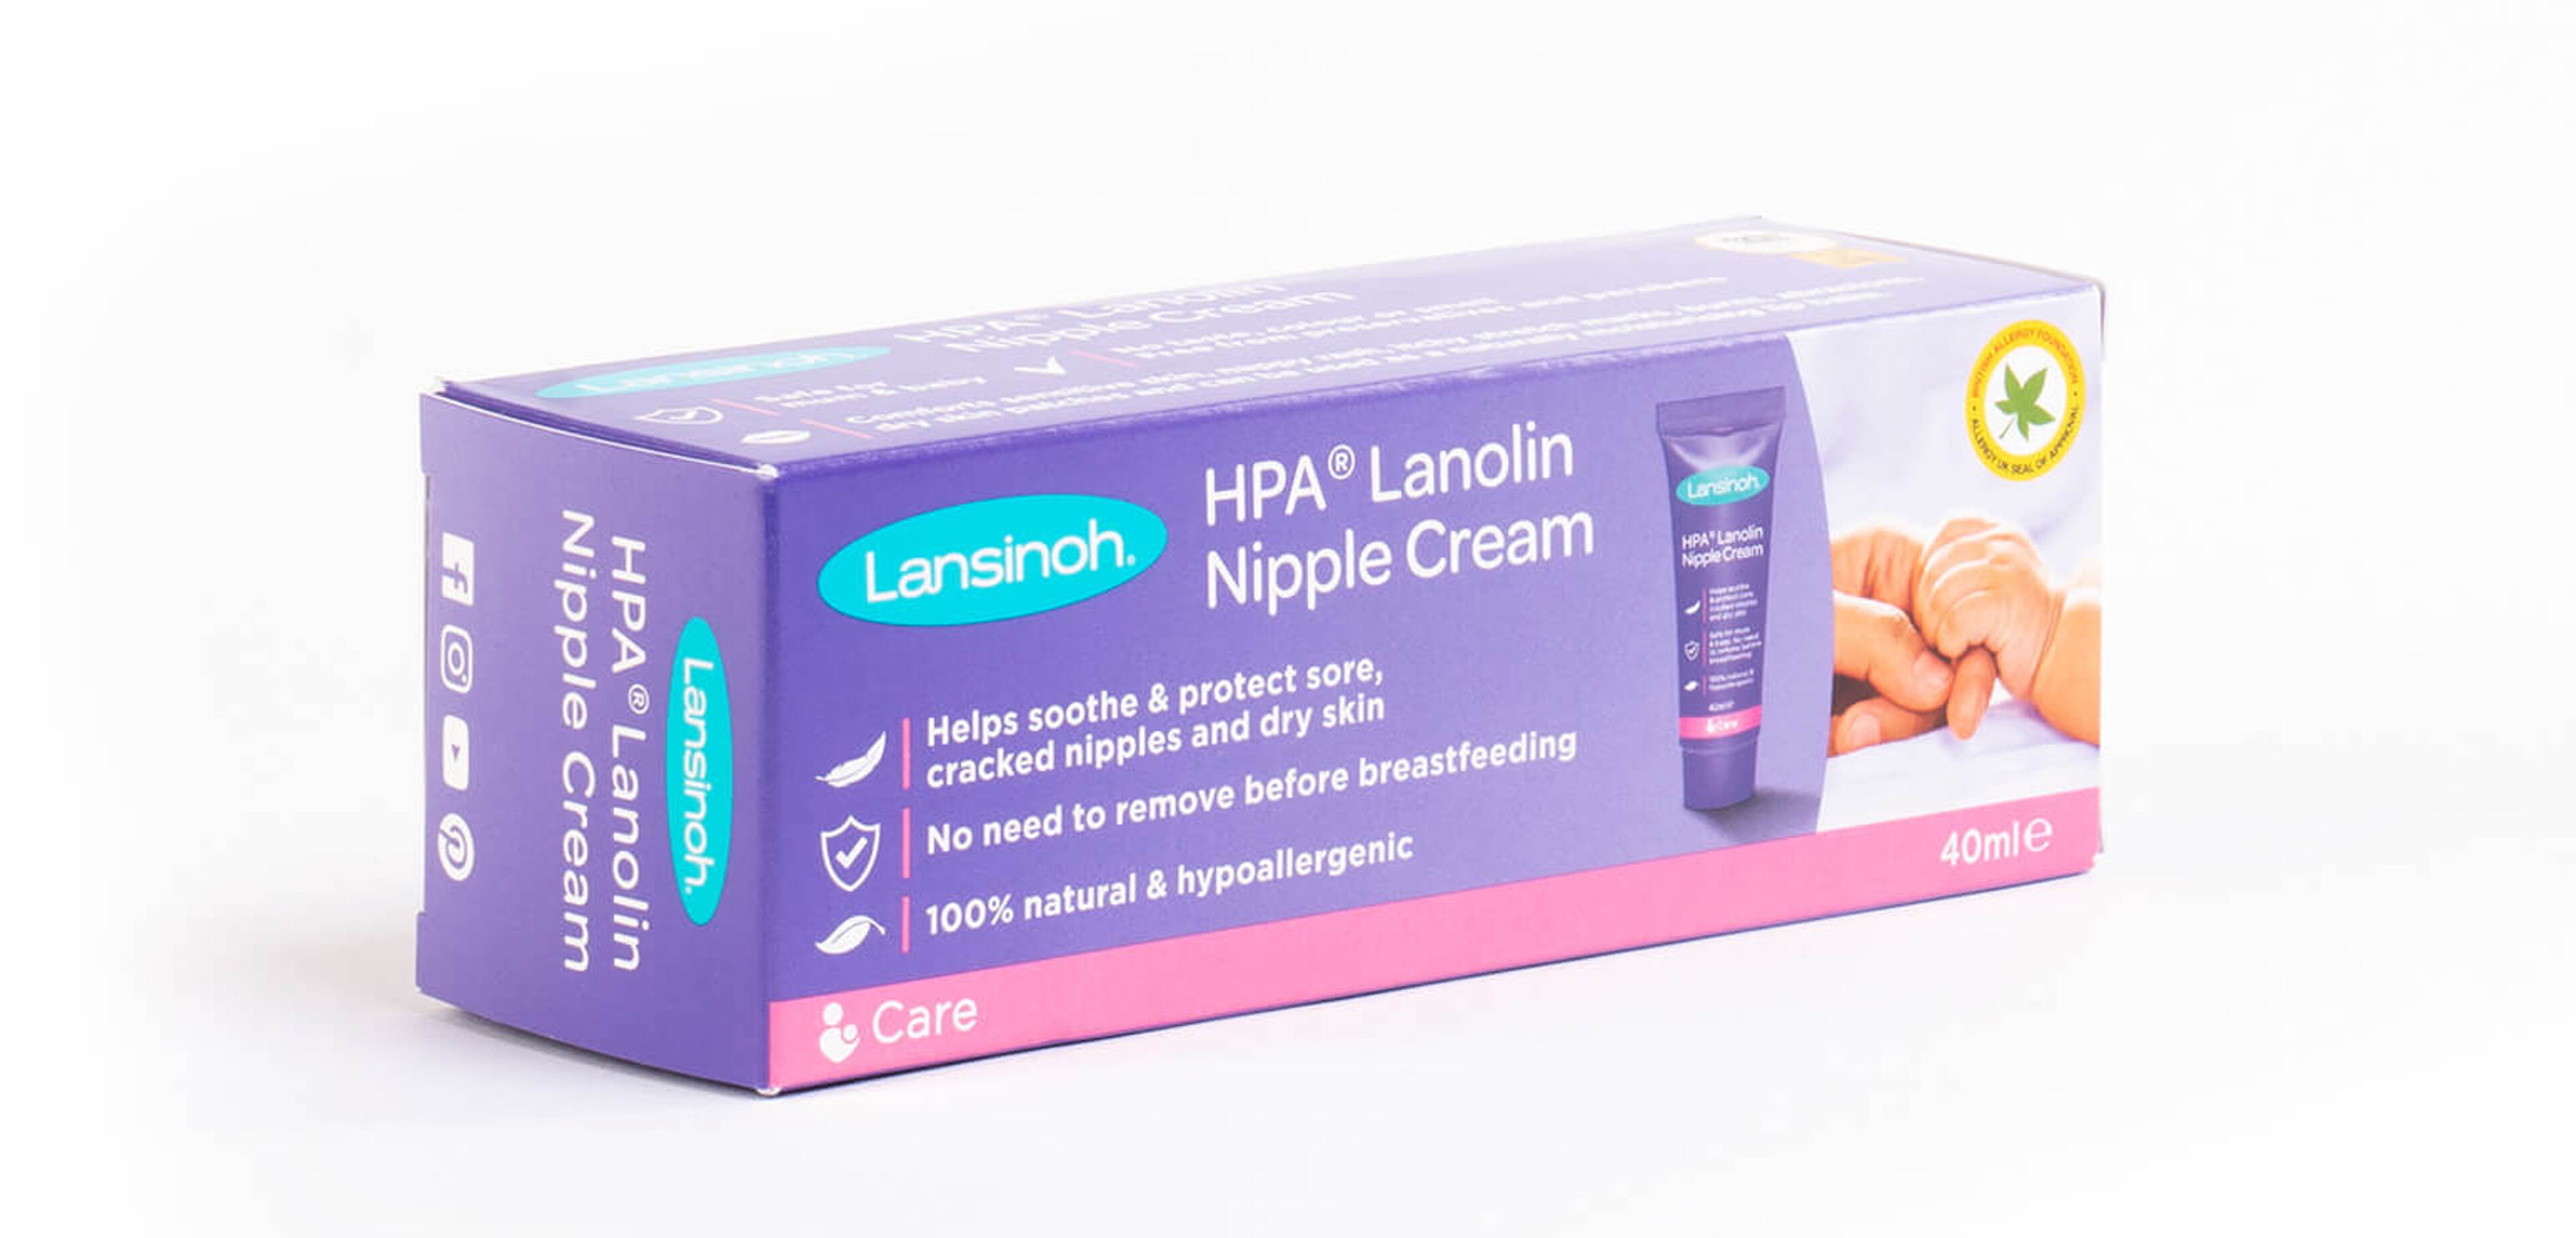 Lansinoh HPA® Lanolin - Nipple Cream